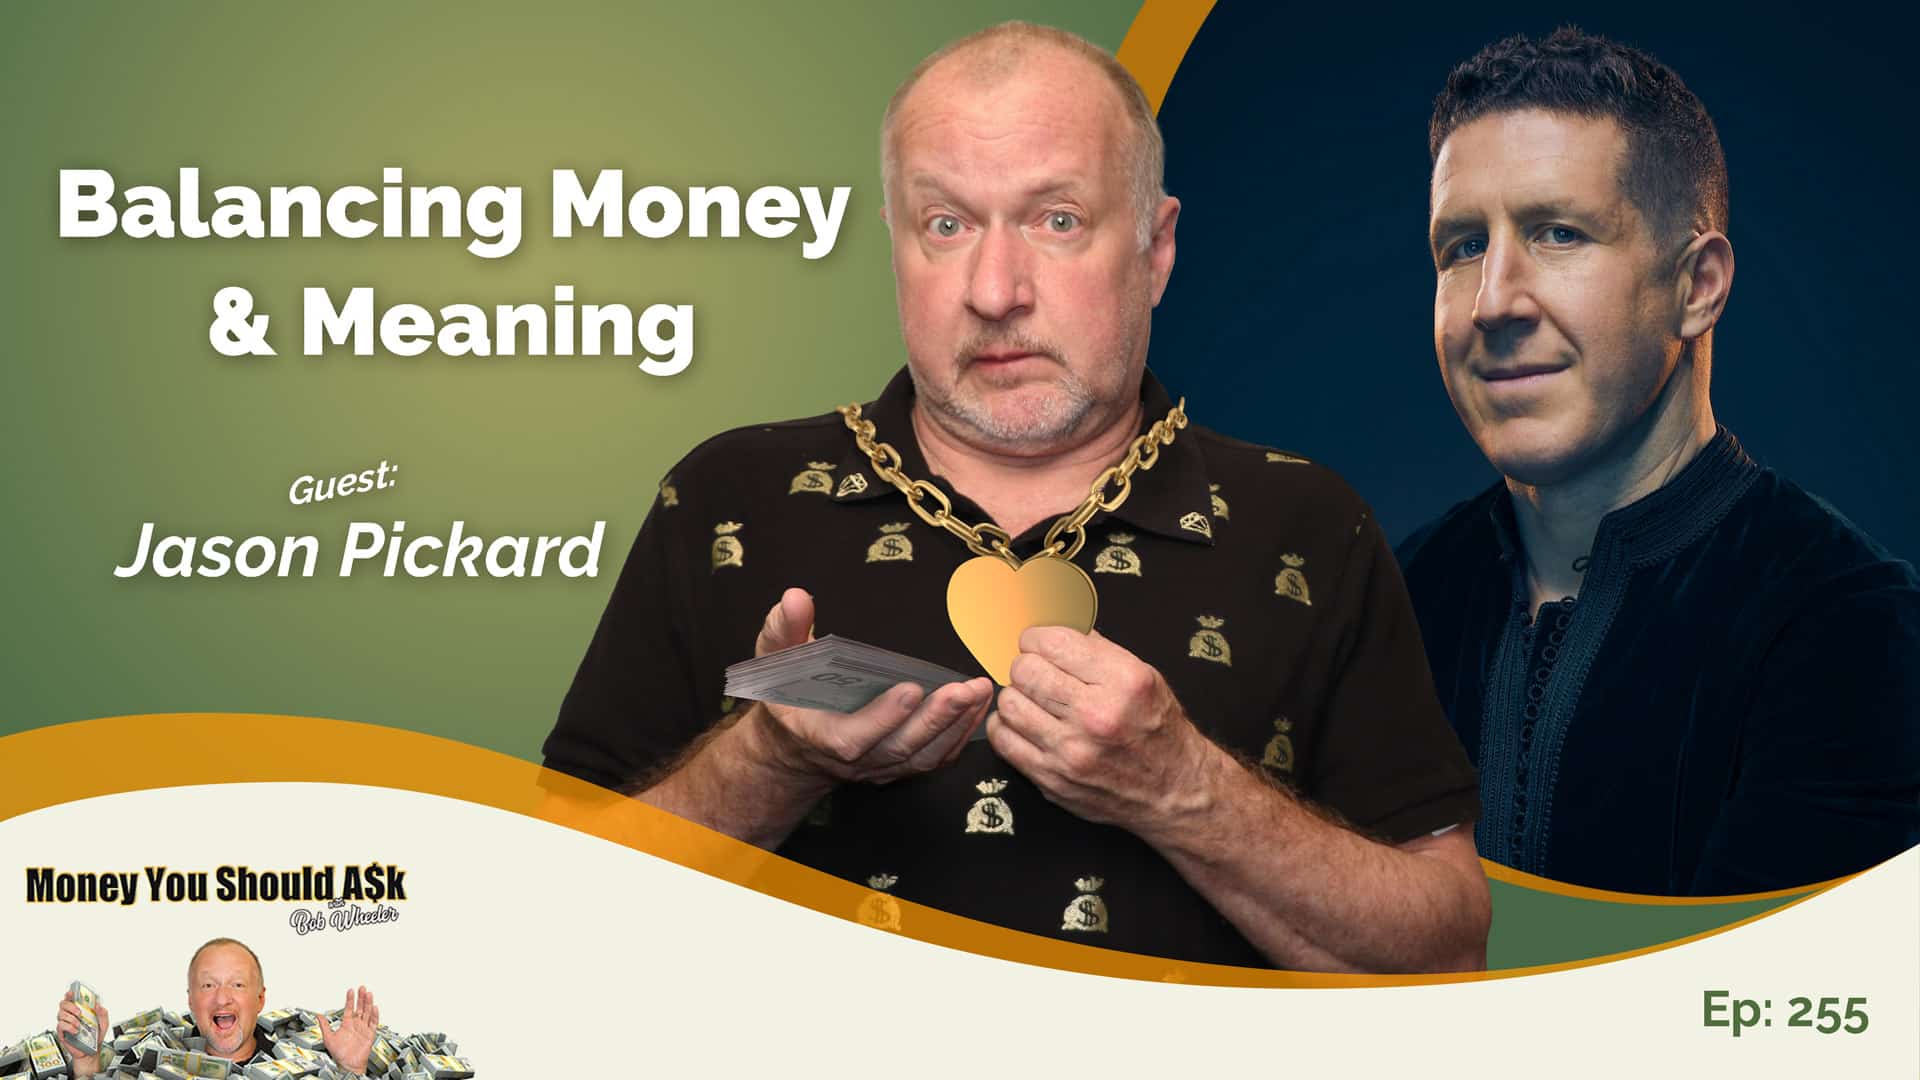 Balancing Money and Meaning. Jason Pickard